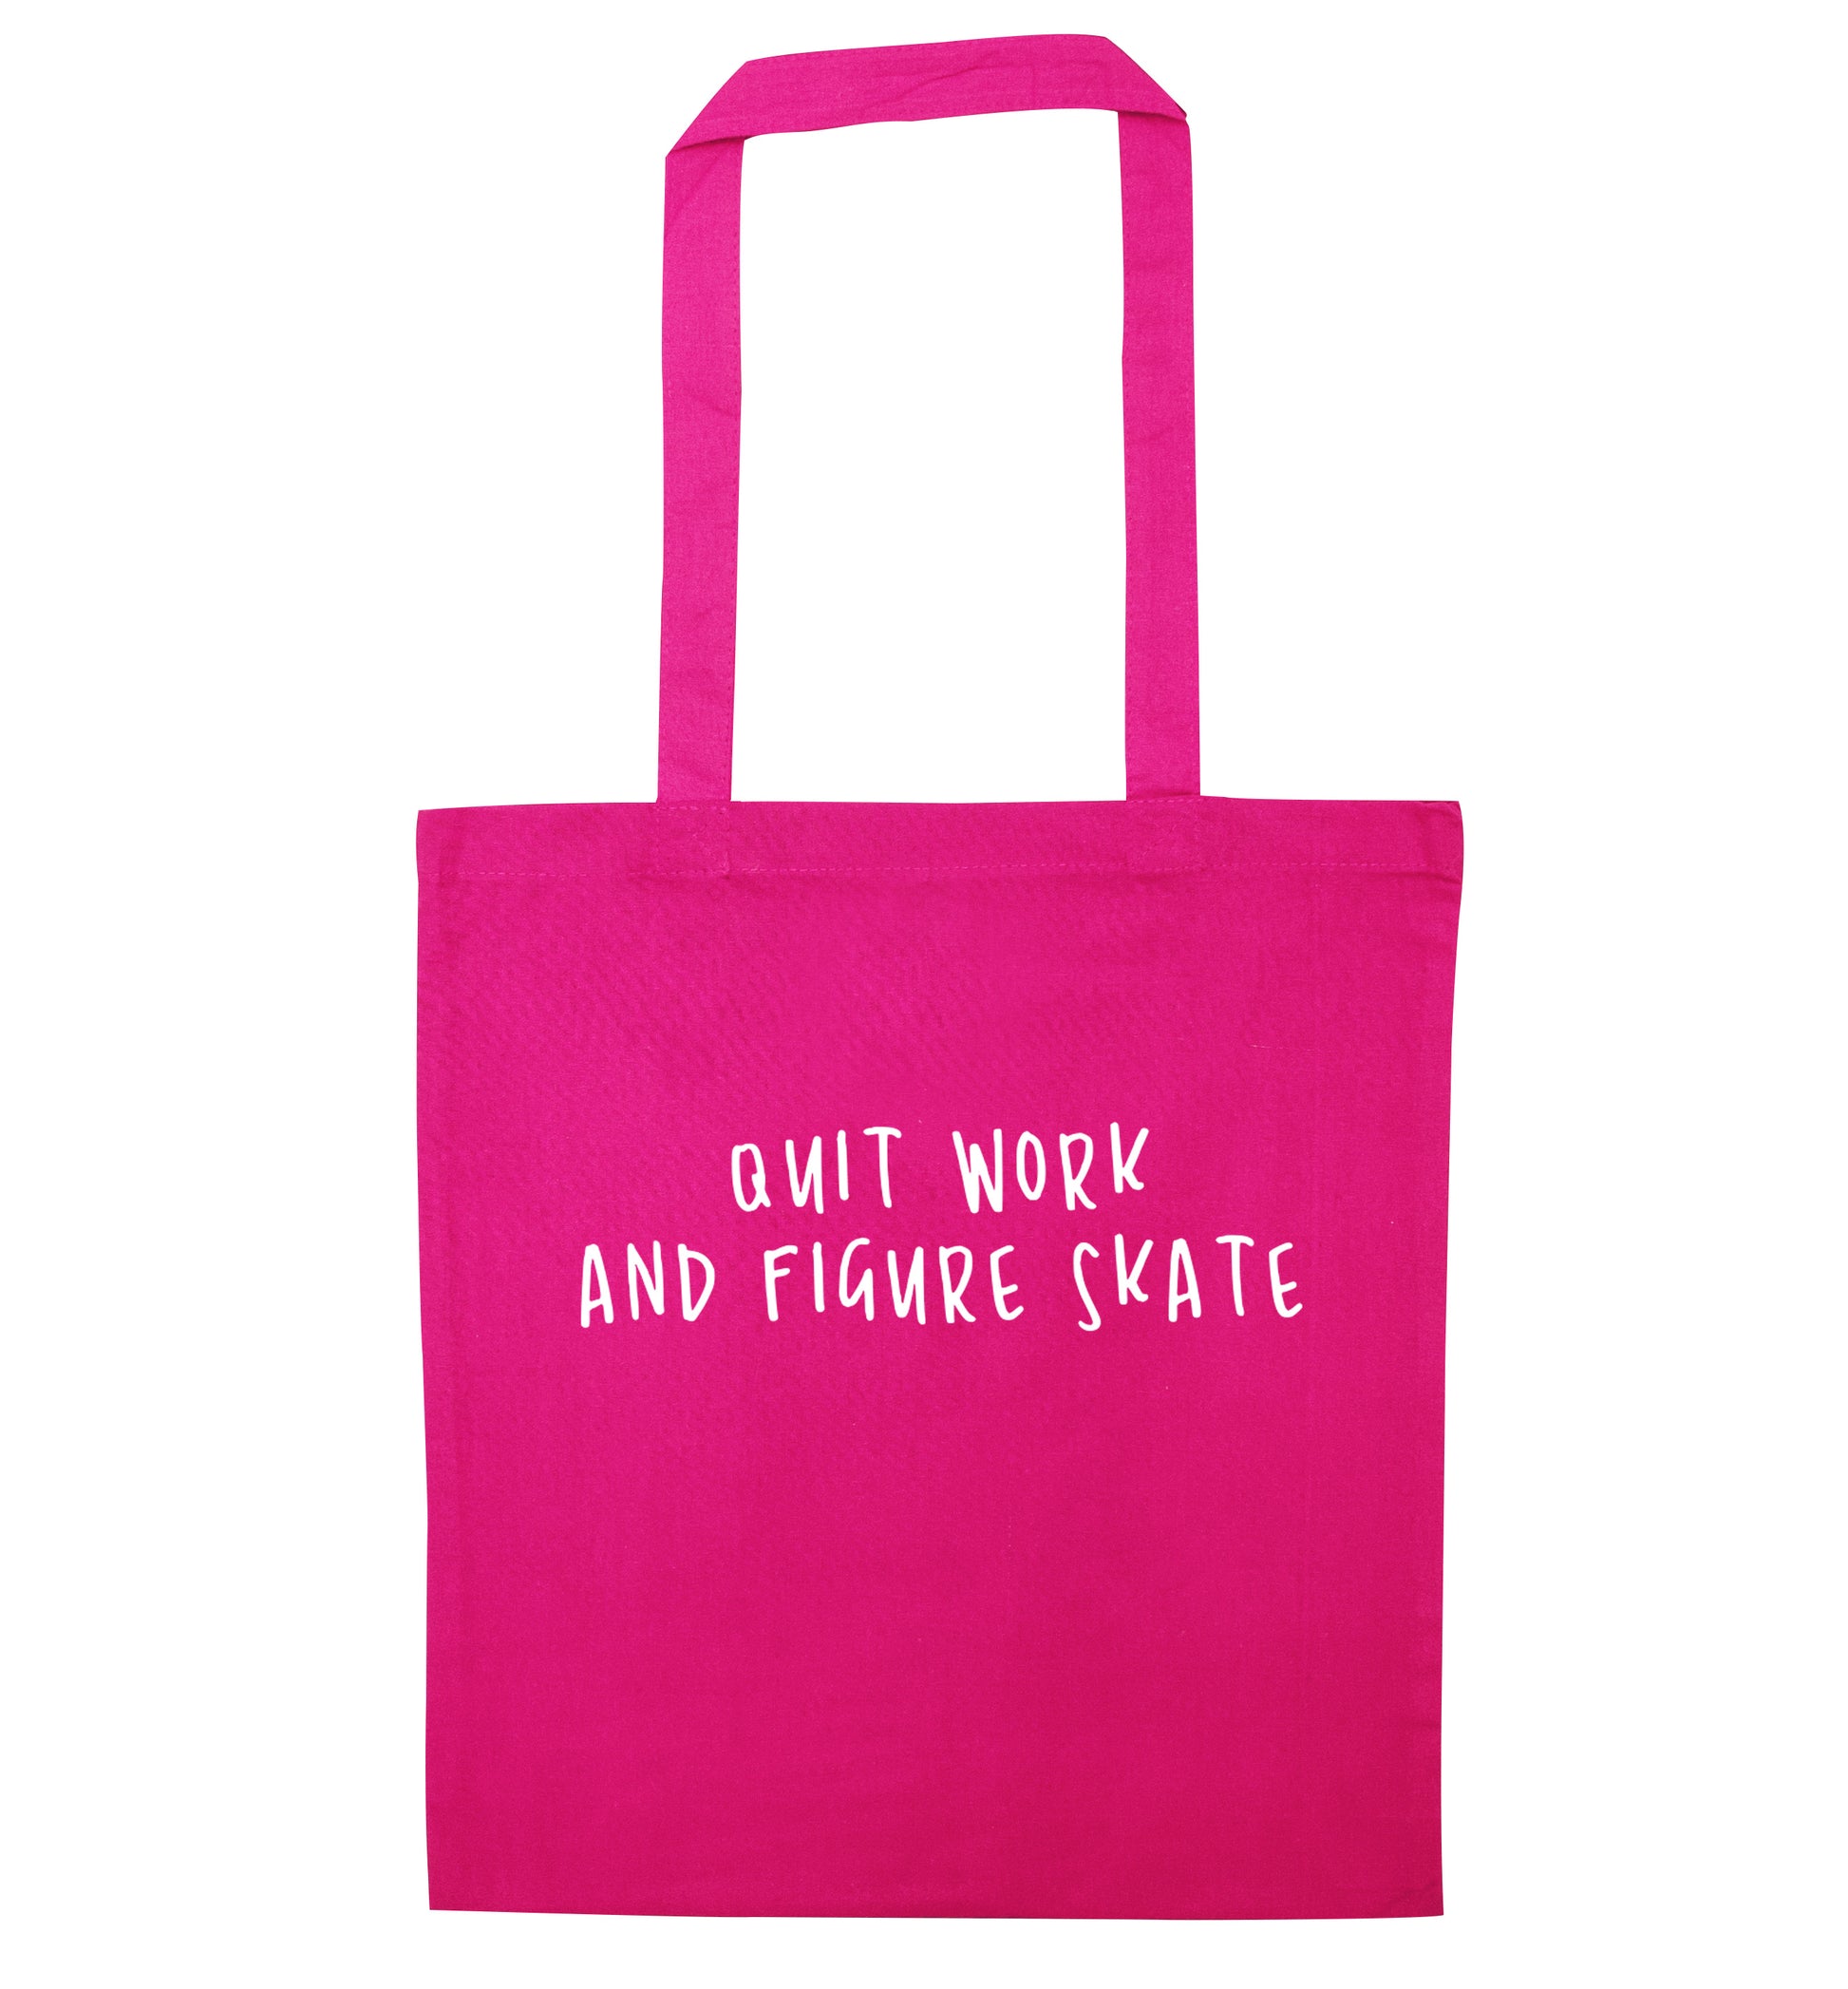 Quit work figure skate pink tote bag